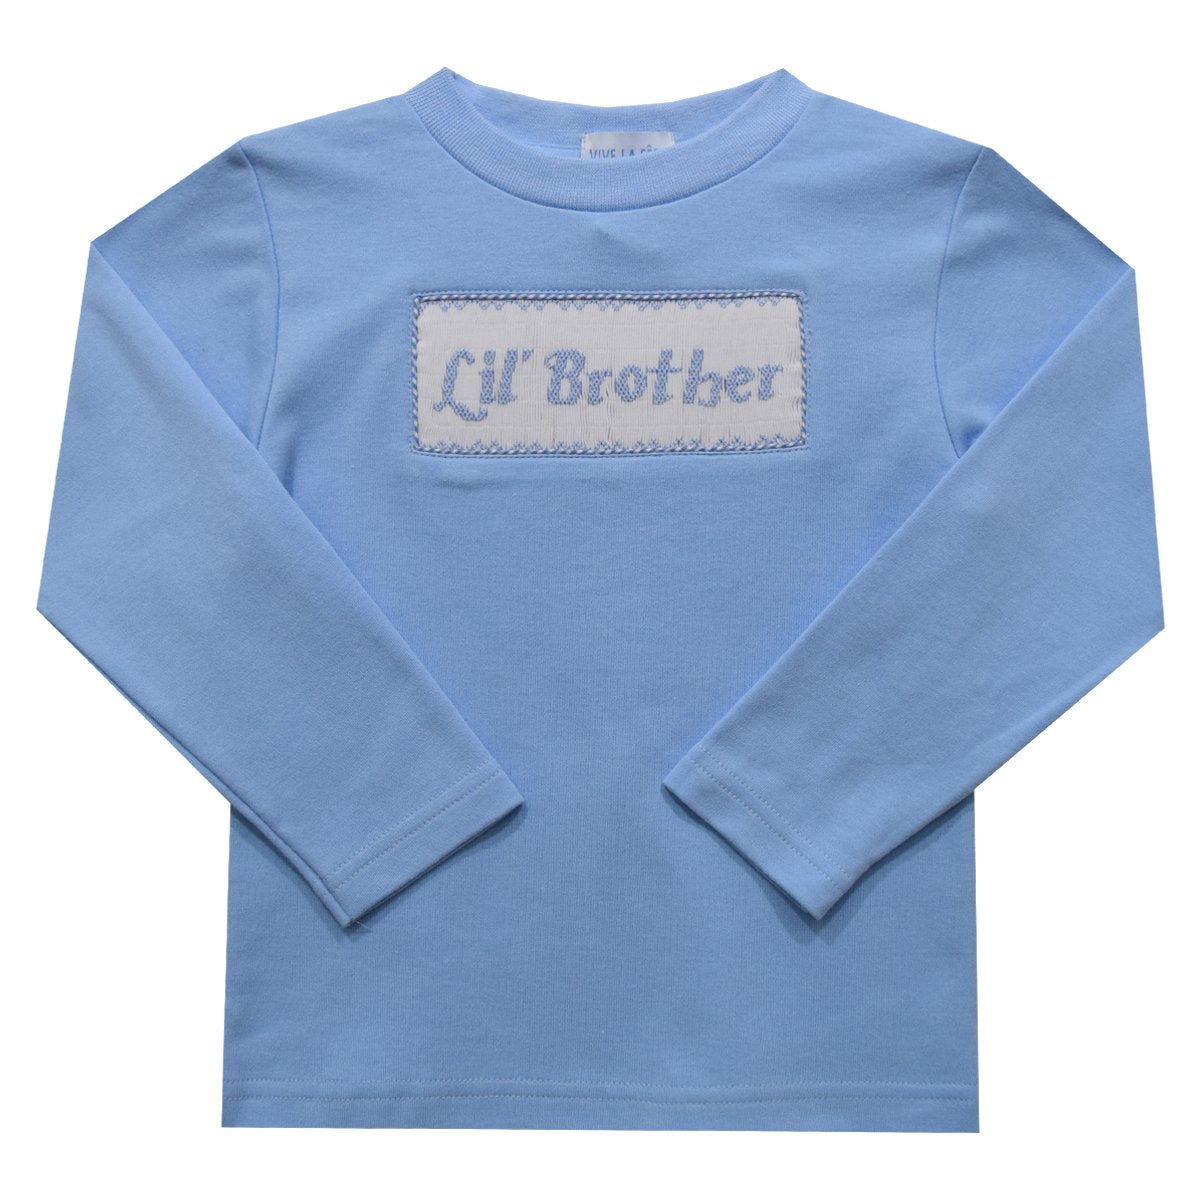 Little Brother Smocked Light Blue Knit Shirt - Breckenridge Baby